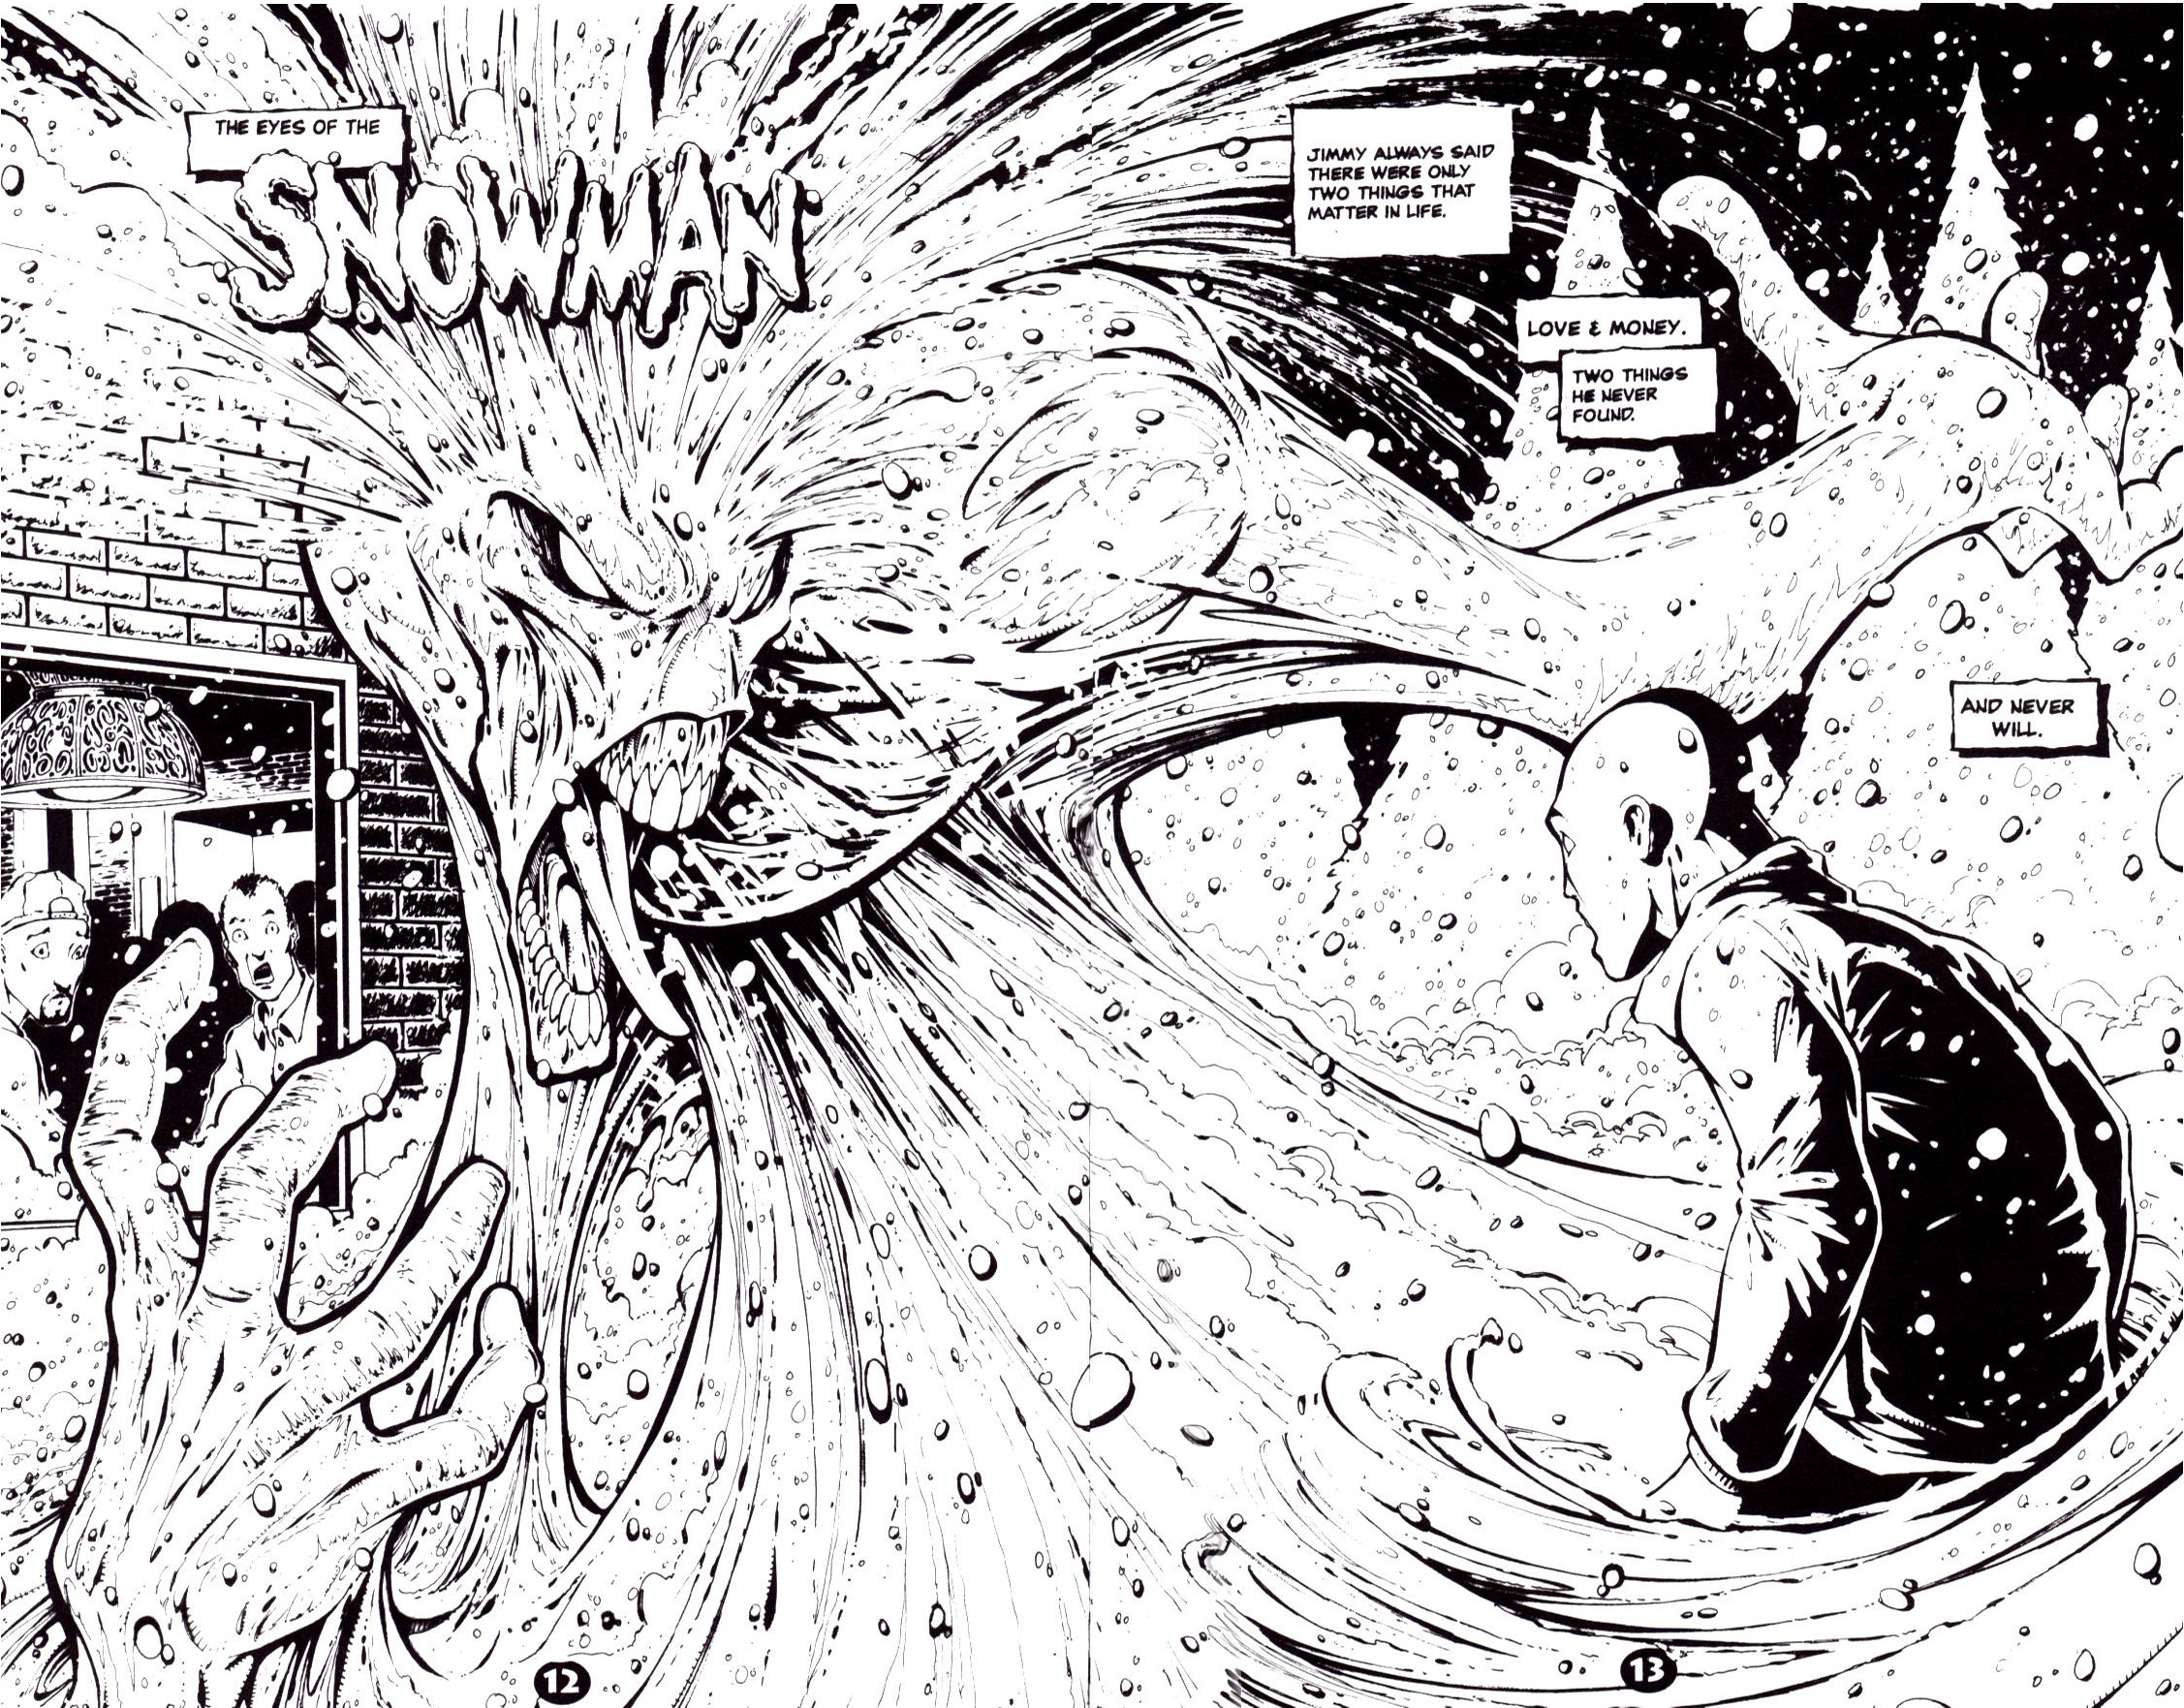 Read online Snowman comic -  Issue #1 - 14